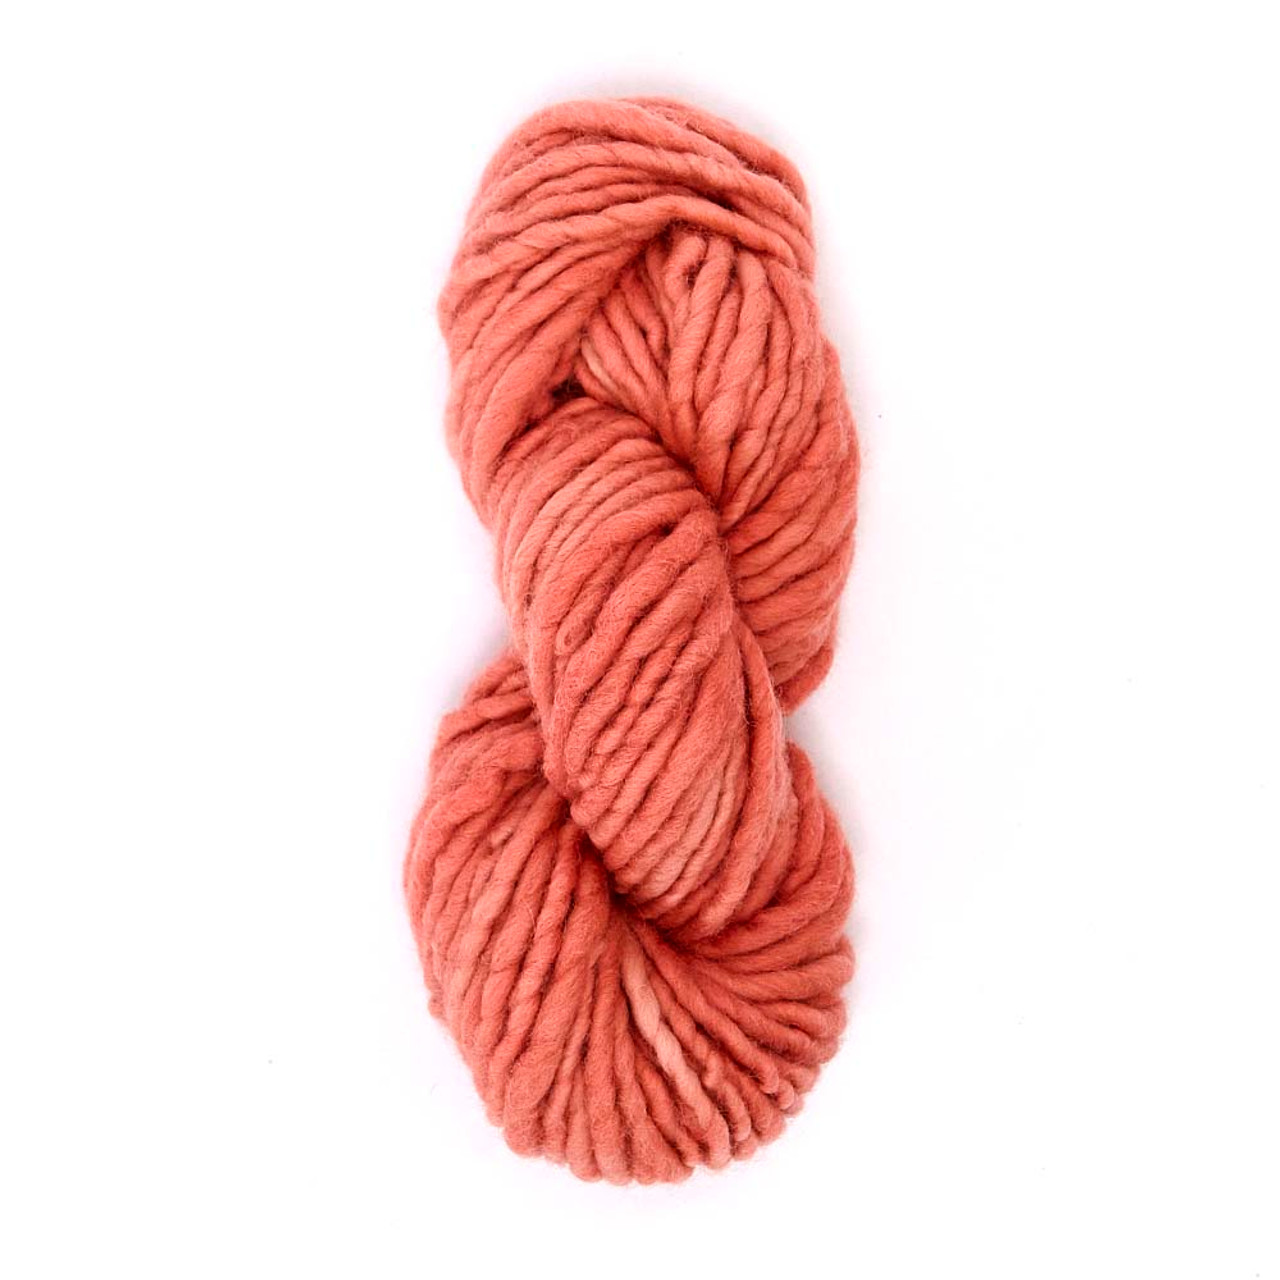 Sulky 12 Wt. Cotton Thread - Orange Flame - 2,100 yd. Jumbo Cone